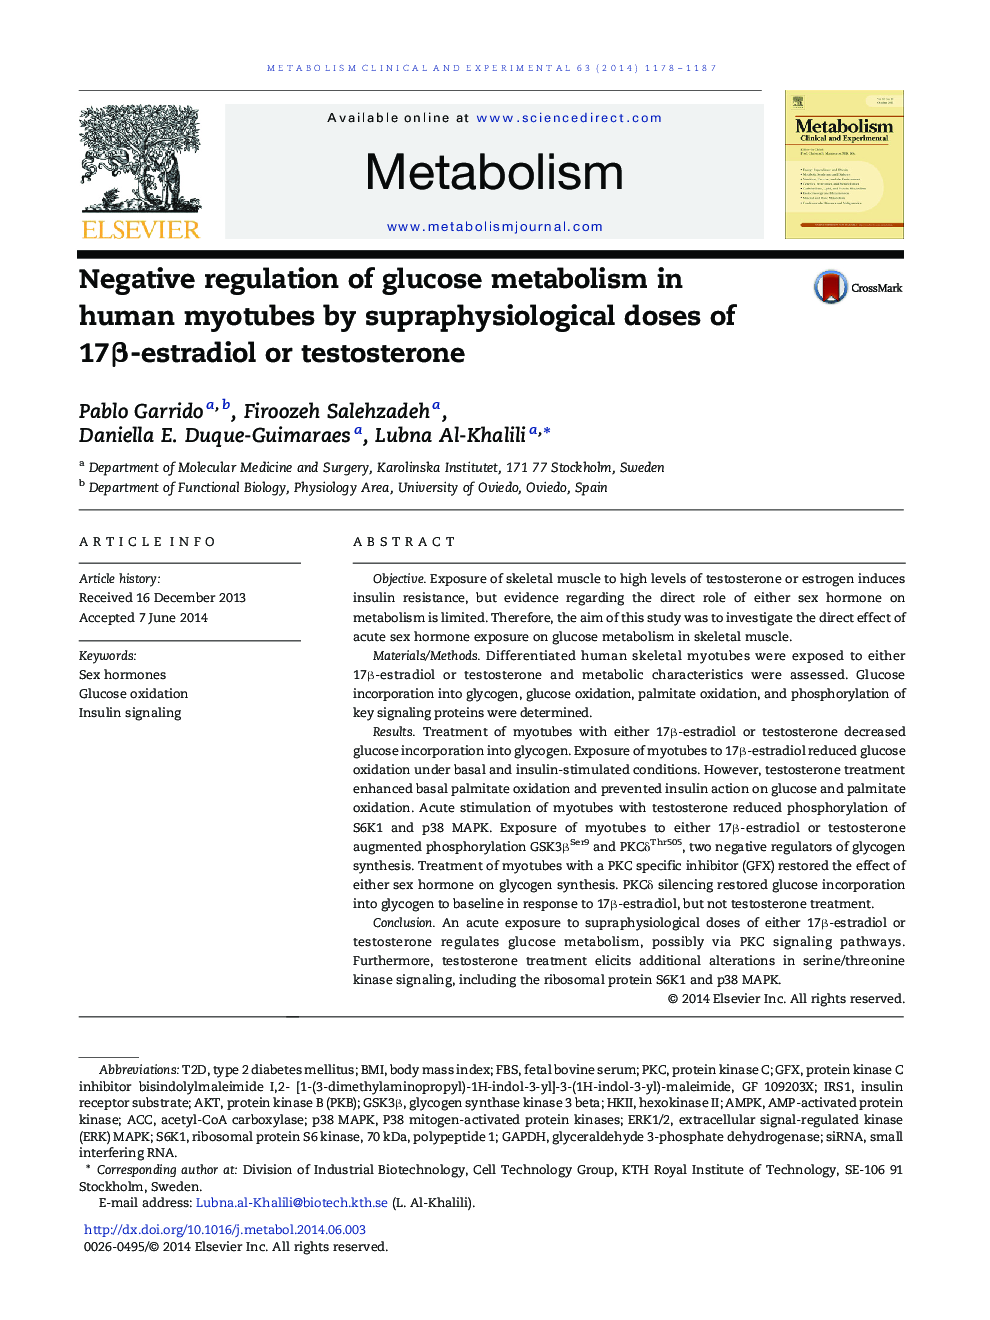 Basic ScienceNegative regulation of glucose metabolism in human myotubes by supraphysiological doses of 17Î²-estradiol or testosterone